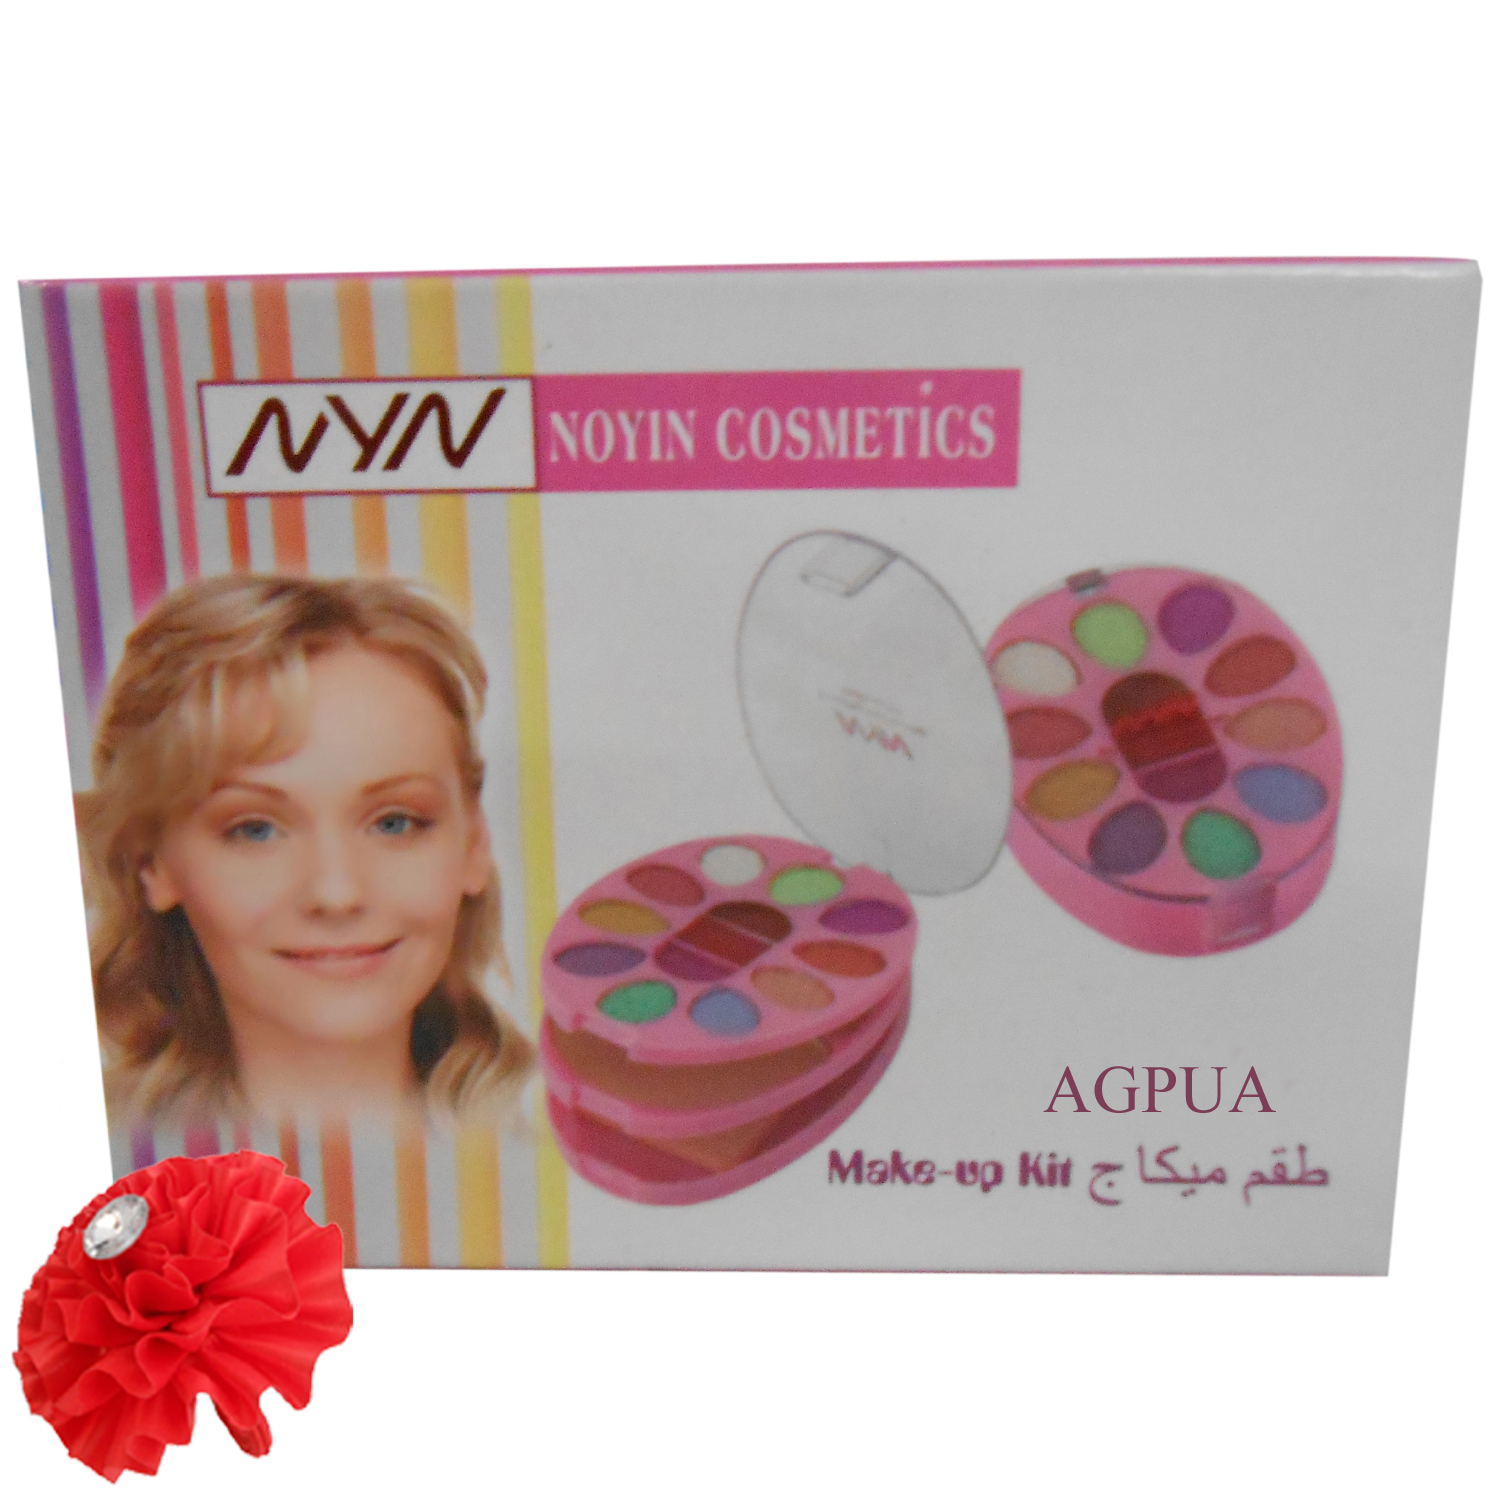 Buy NYN Makeup Kit Good Choice AGUPA Online @ ₹206 from ShopClues